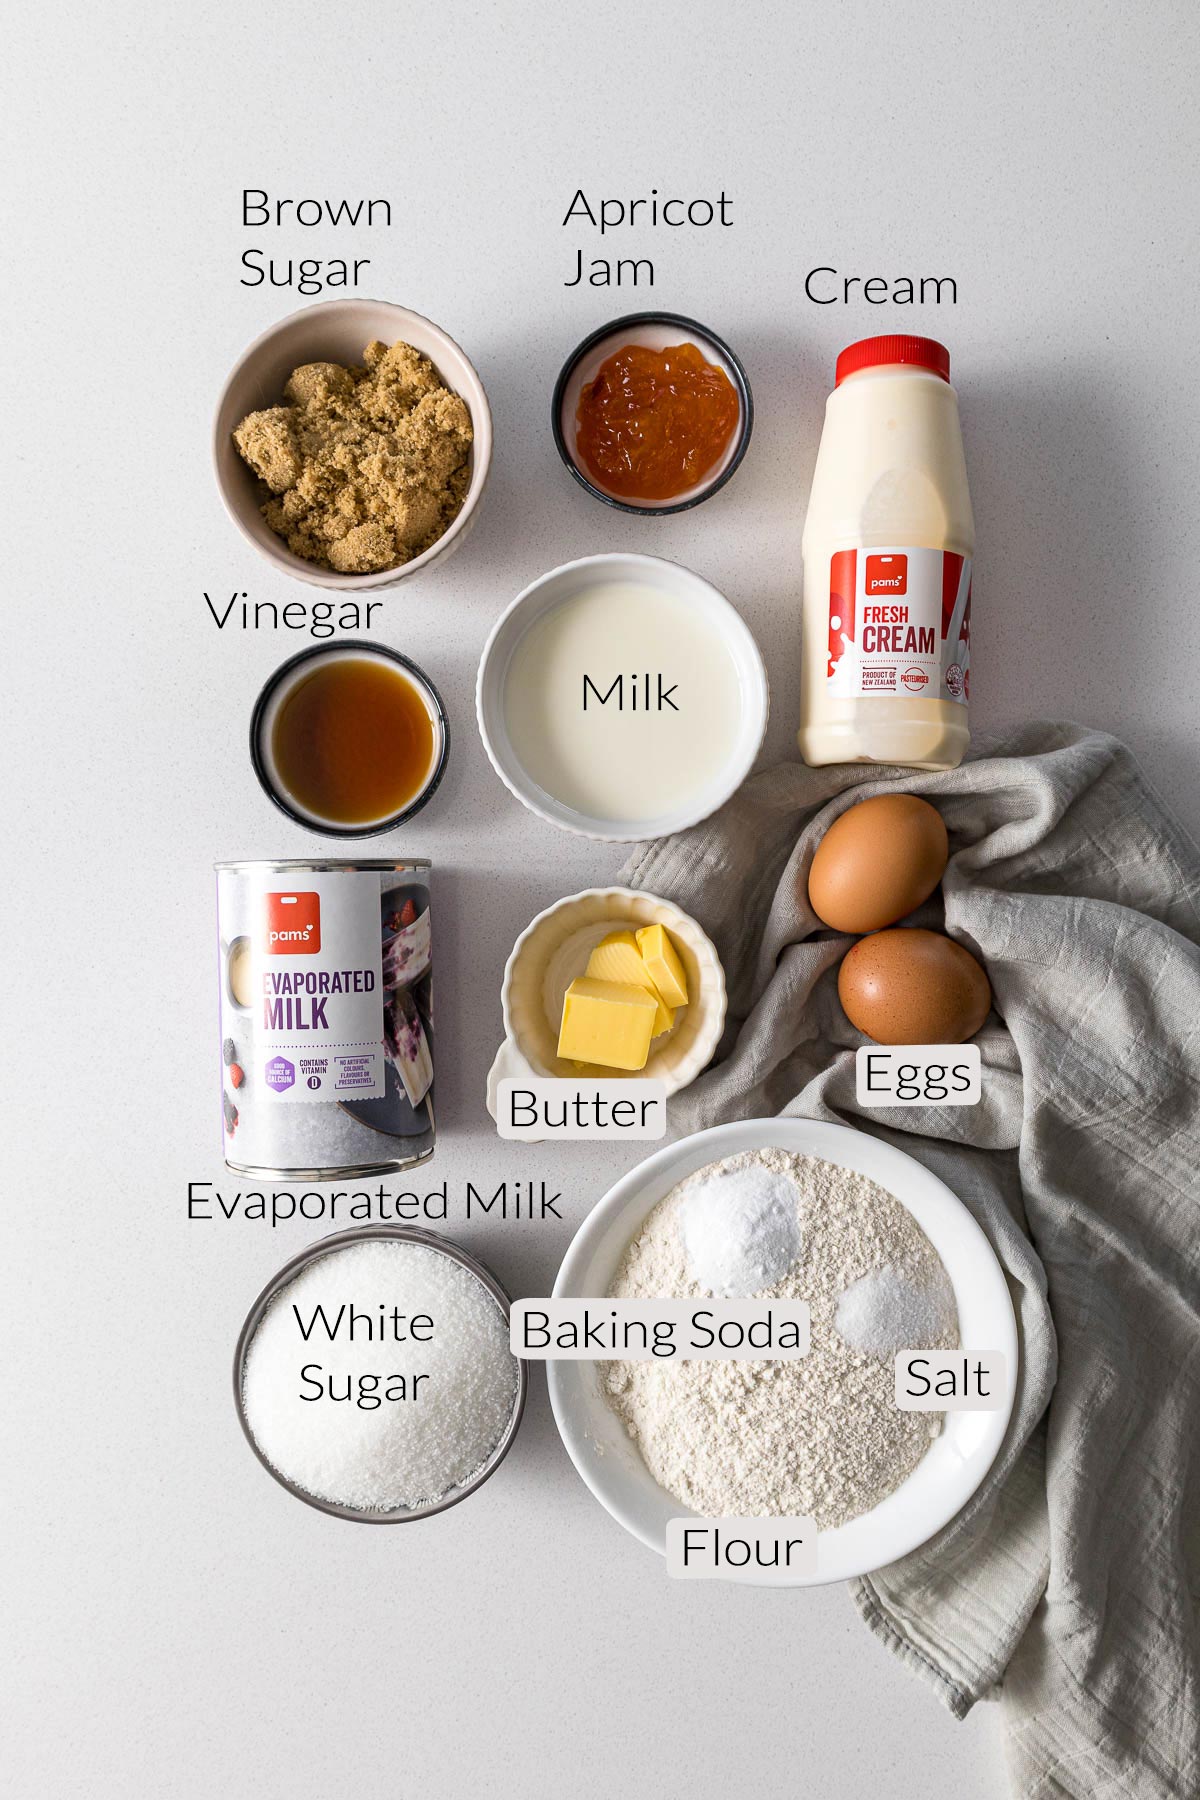 Malva pudding ingredients - sugar, cream, apricot jam, milk, eggs, butter, vinegar, flour, baking soda, salt and evaporated milk.